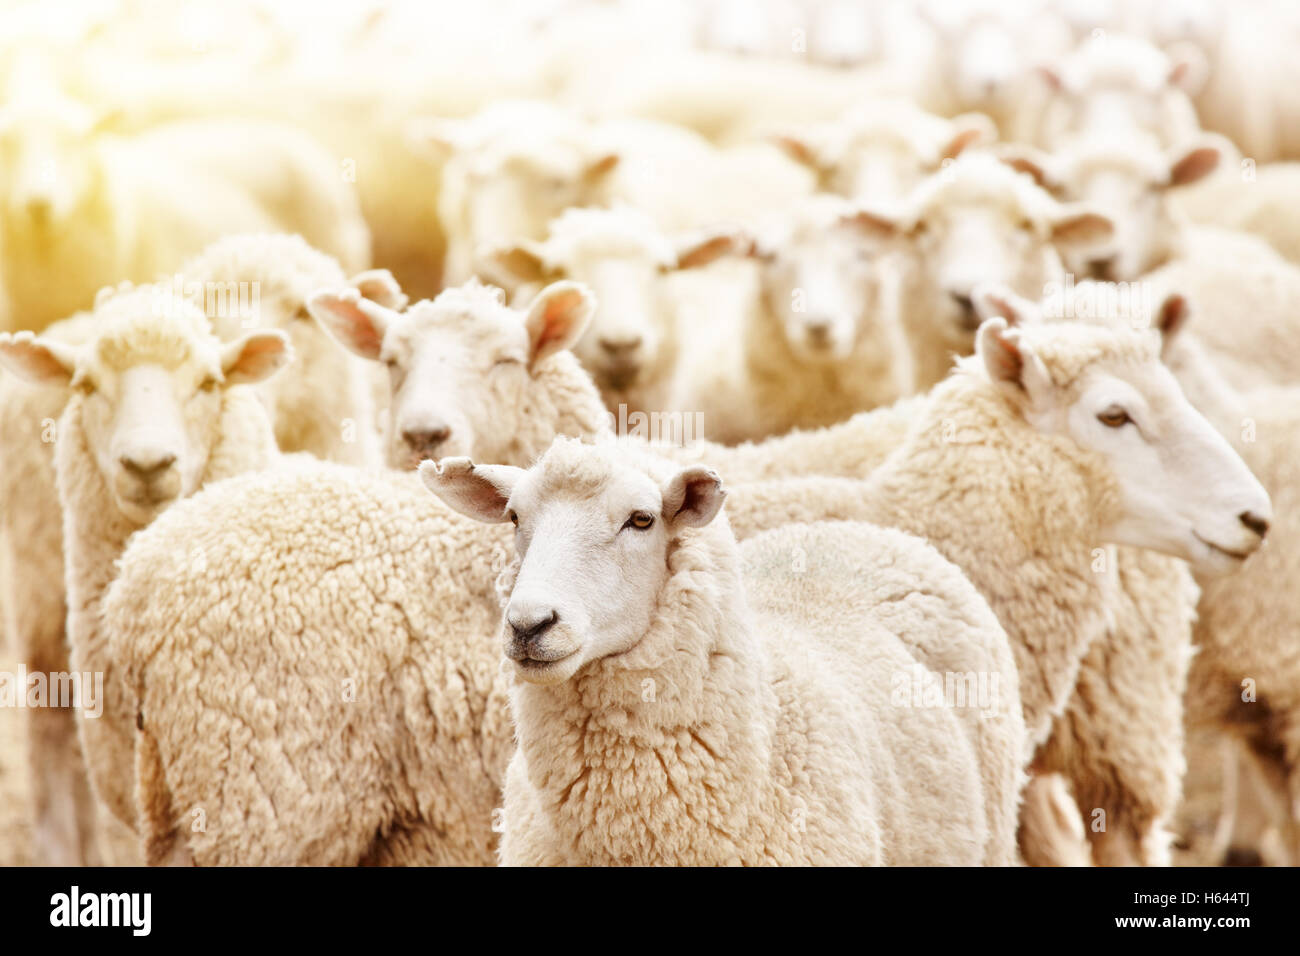 Livestock farm, flock of sheep Stock Photo